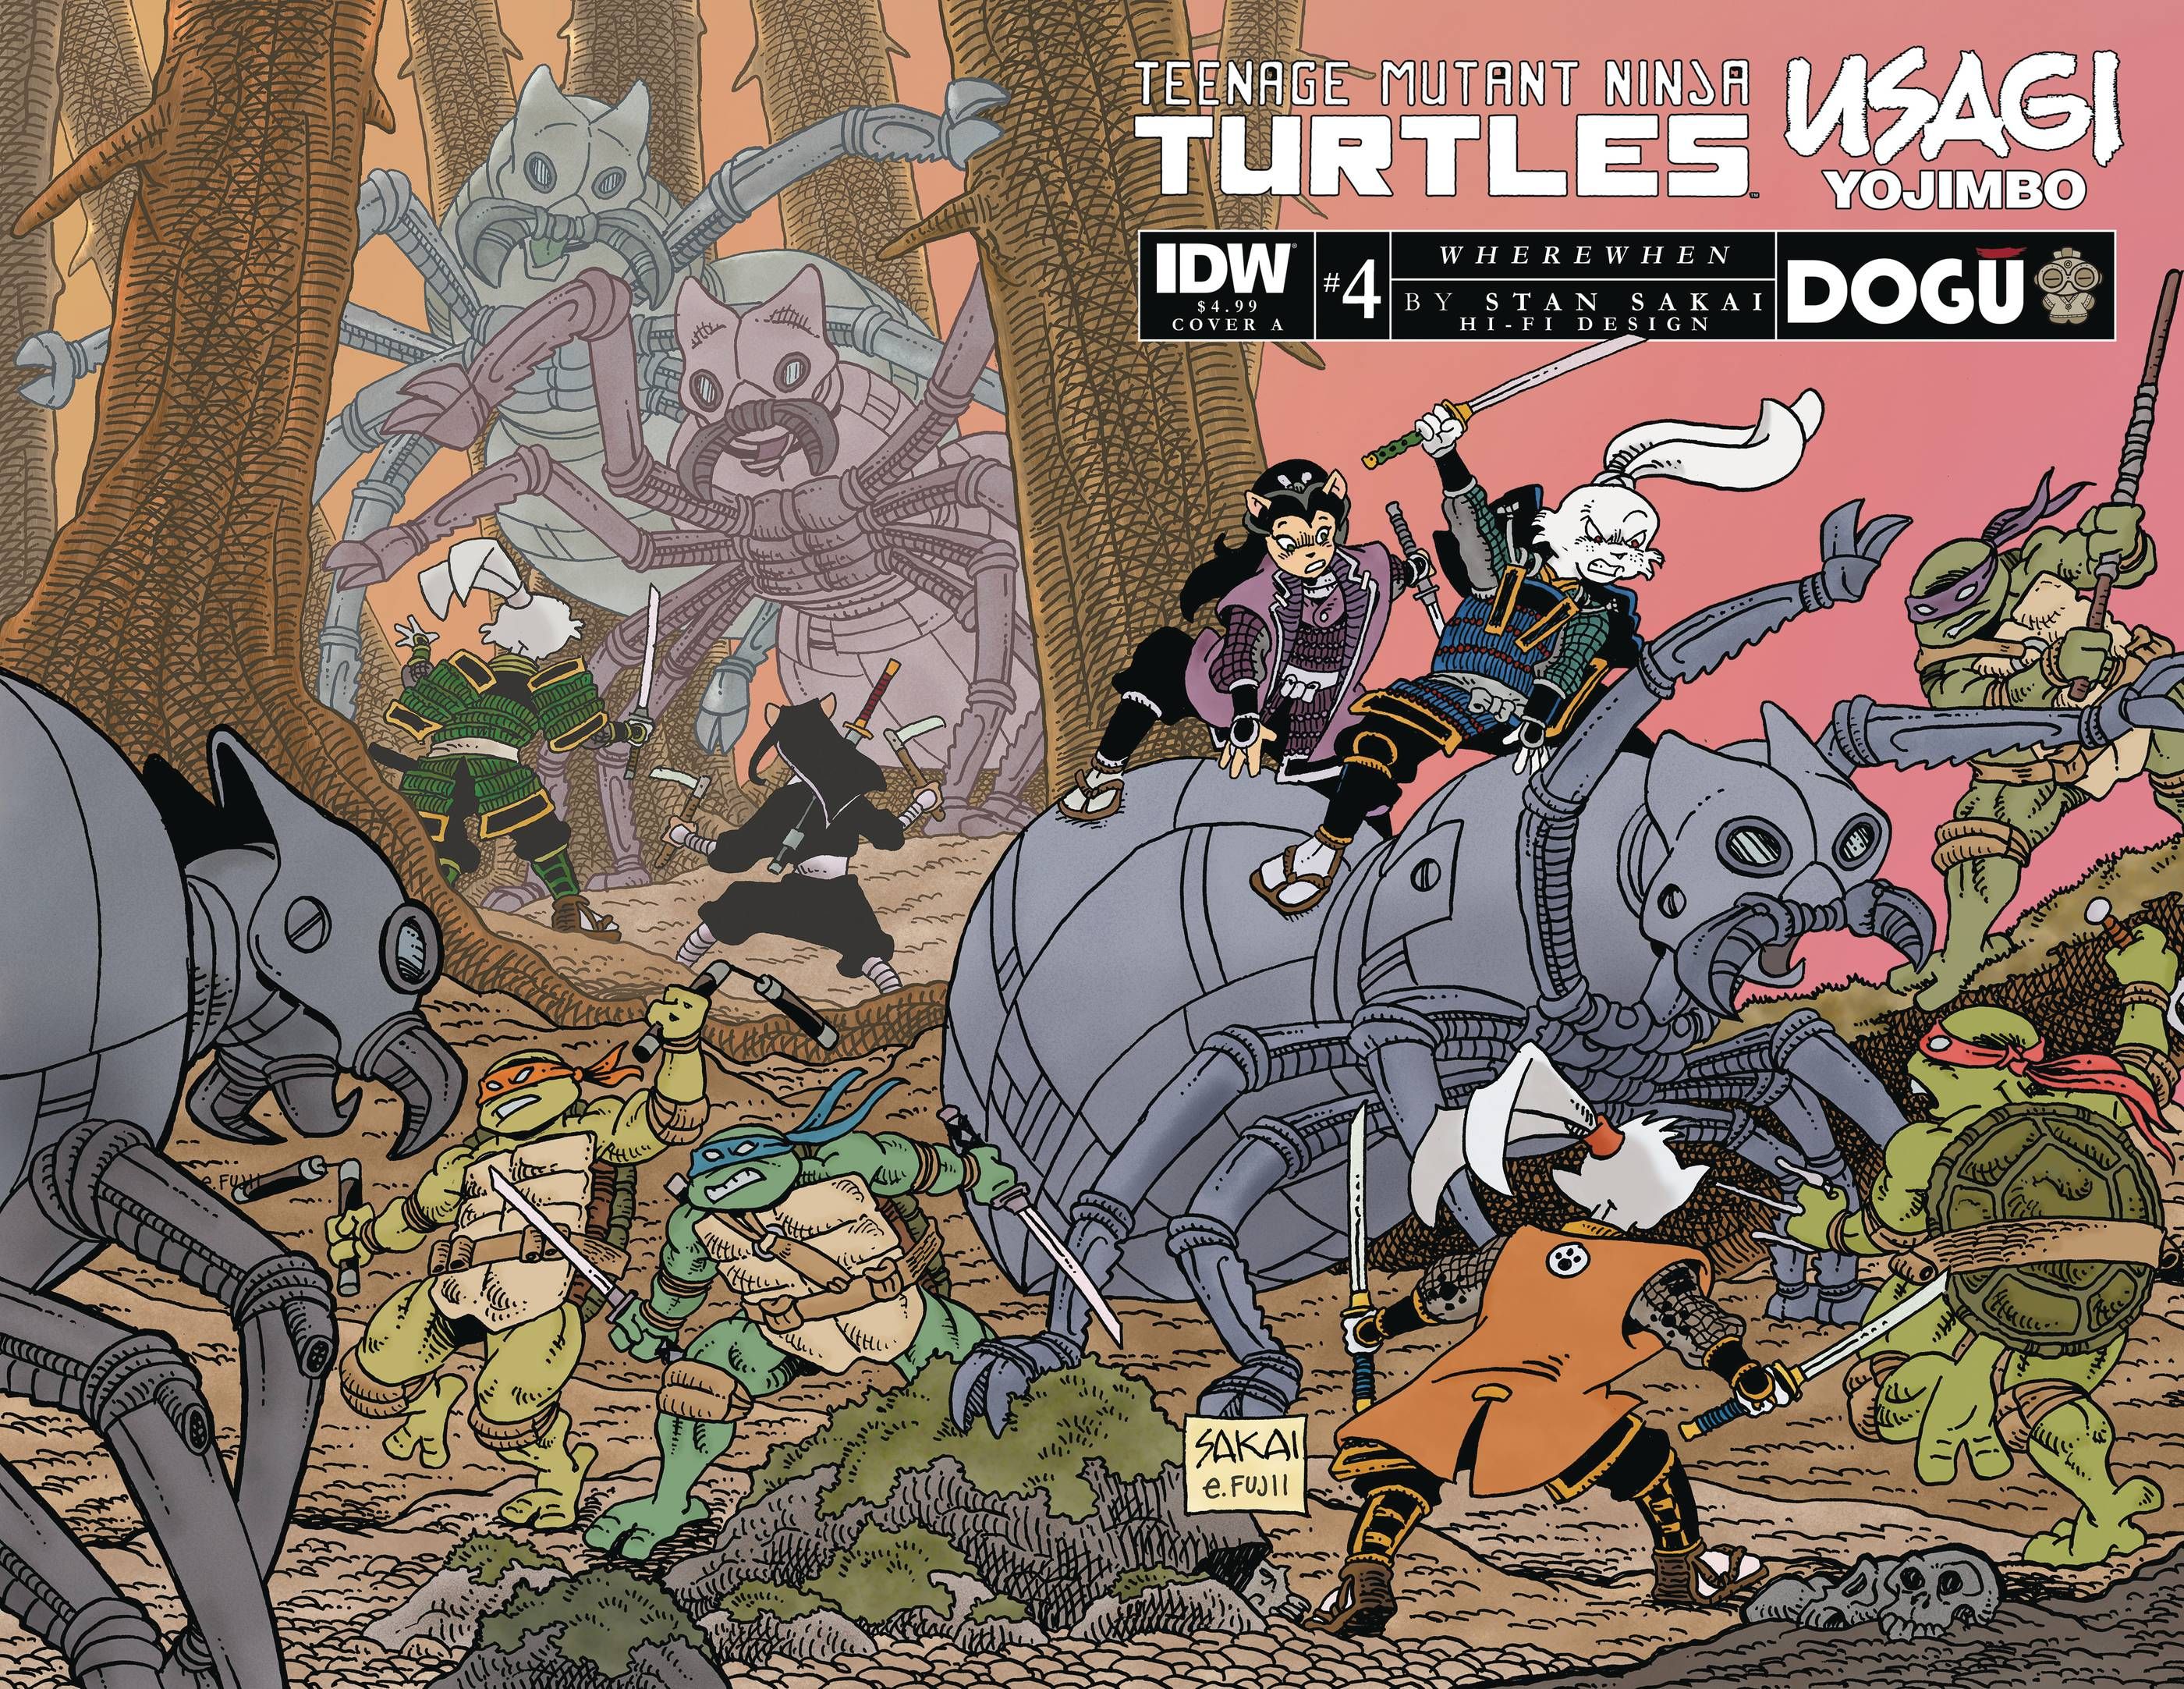 Teenage Mutant Ninja Turtles / Usagi Yojimbo: WhereWhen #4 Comic